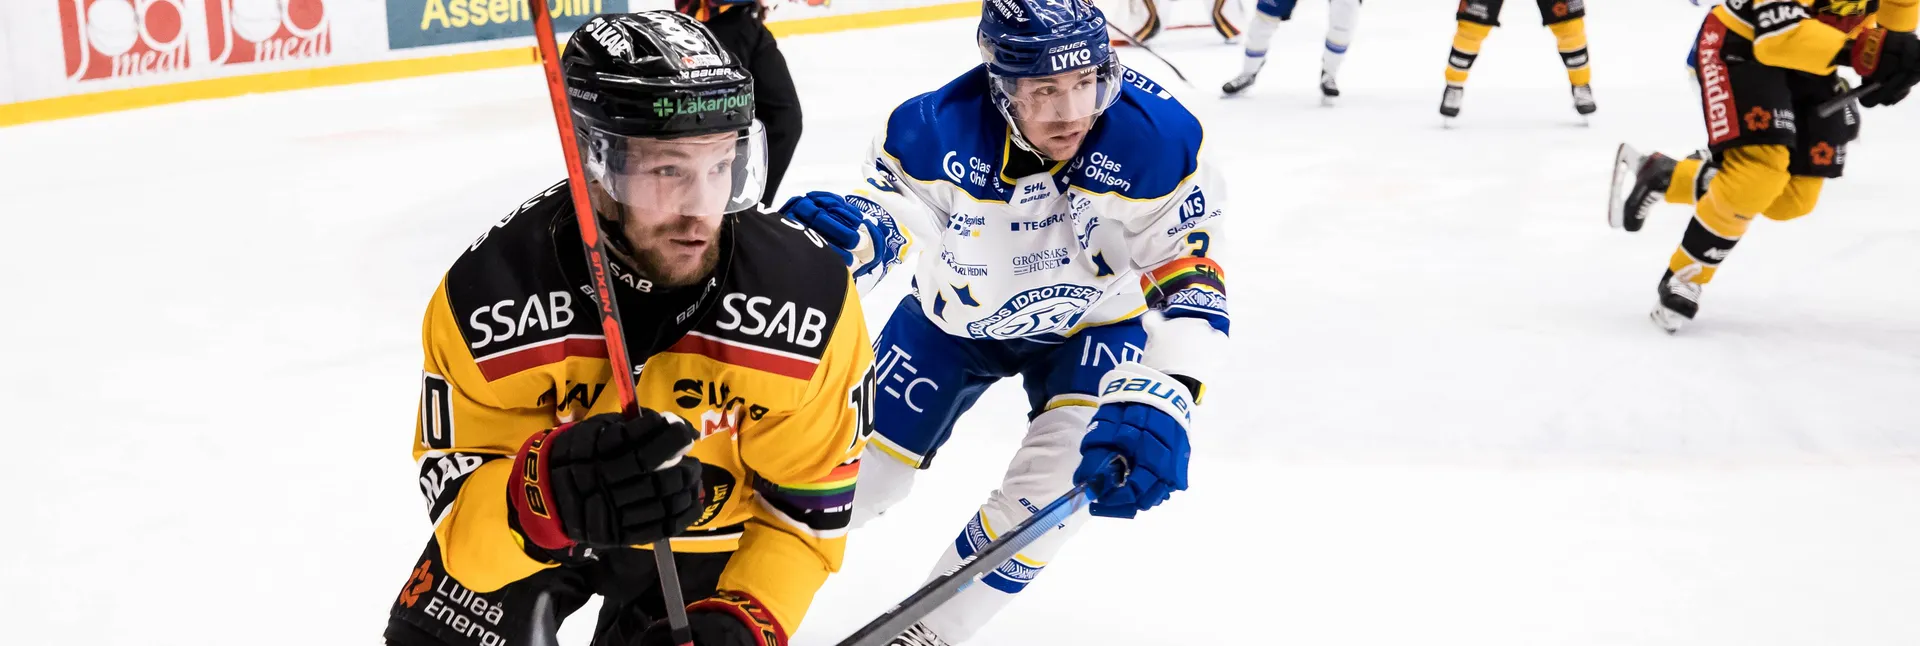 Ishockeymatch mellan  Leksand och Luleå i SHL